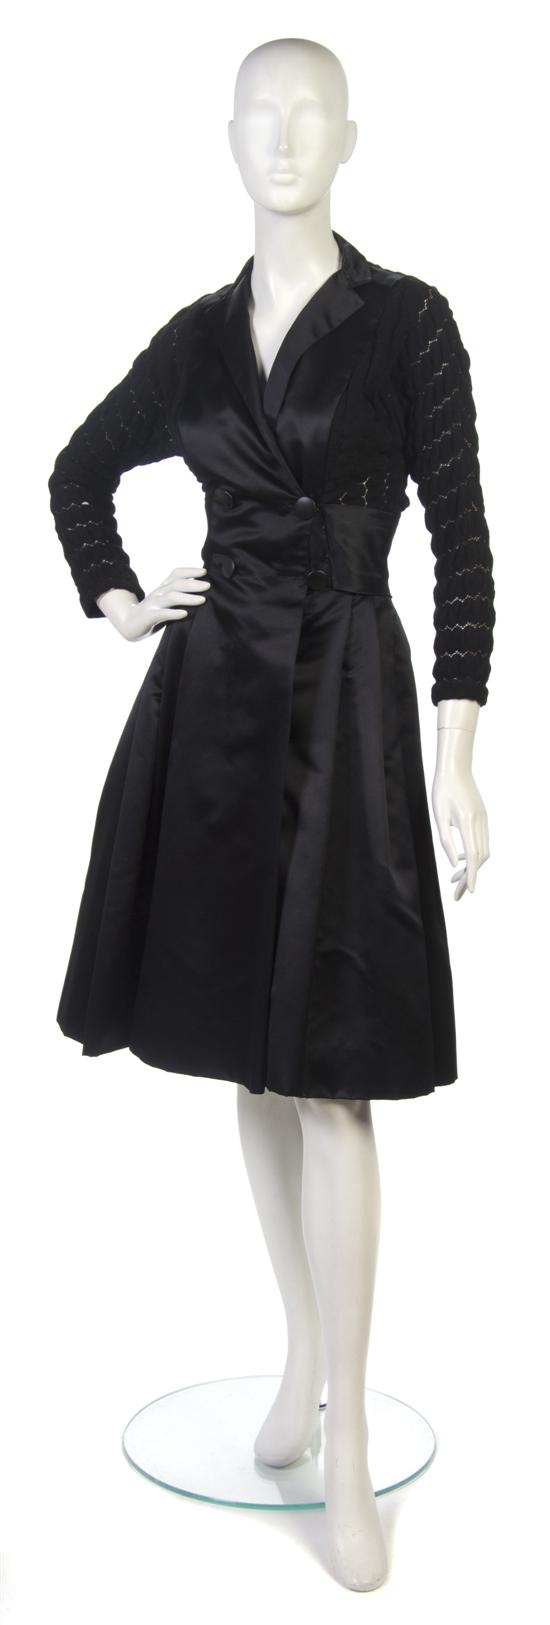 A Dan Werle Black Evening Dress. Labeled: